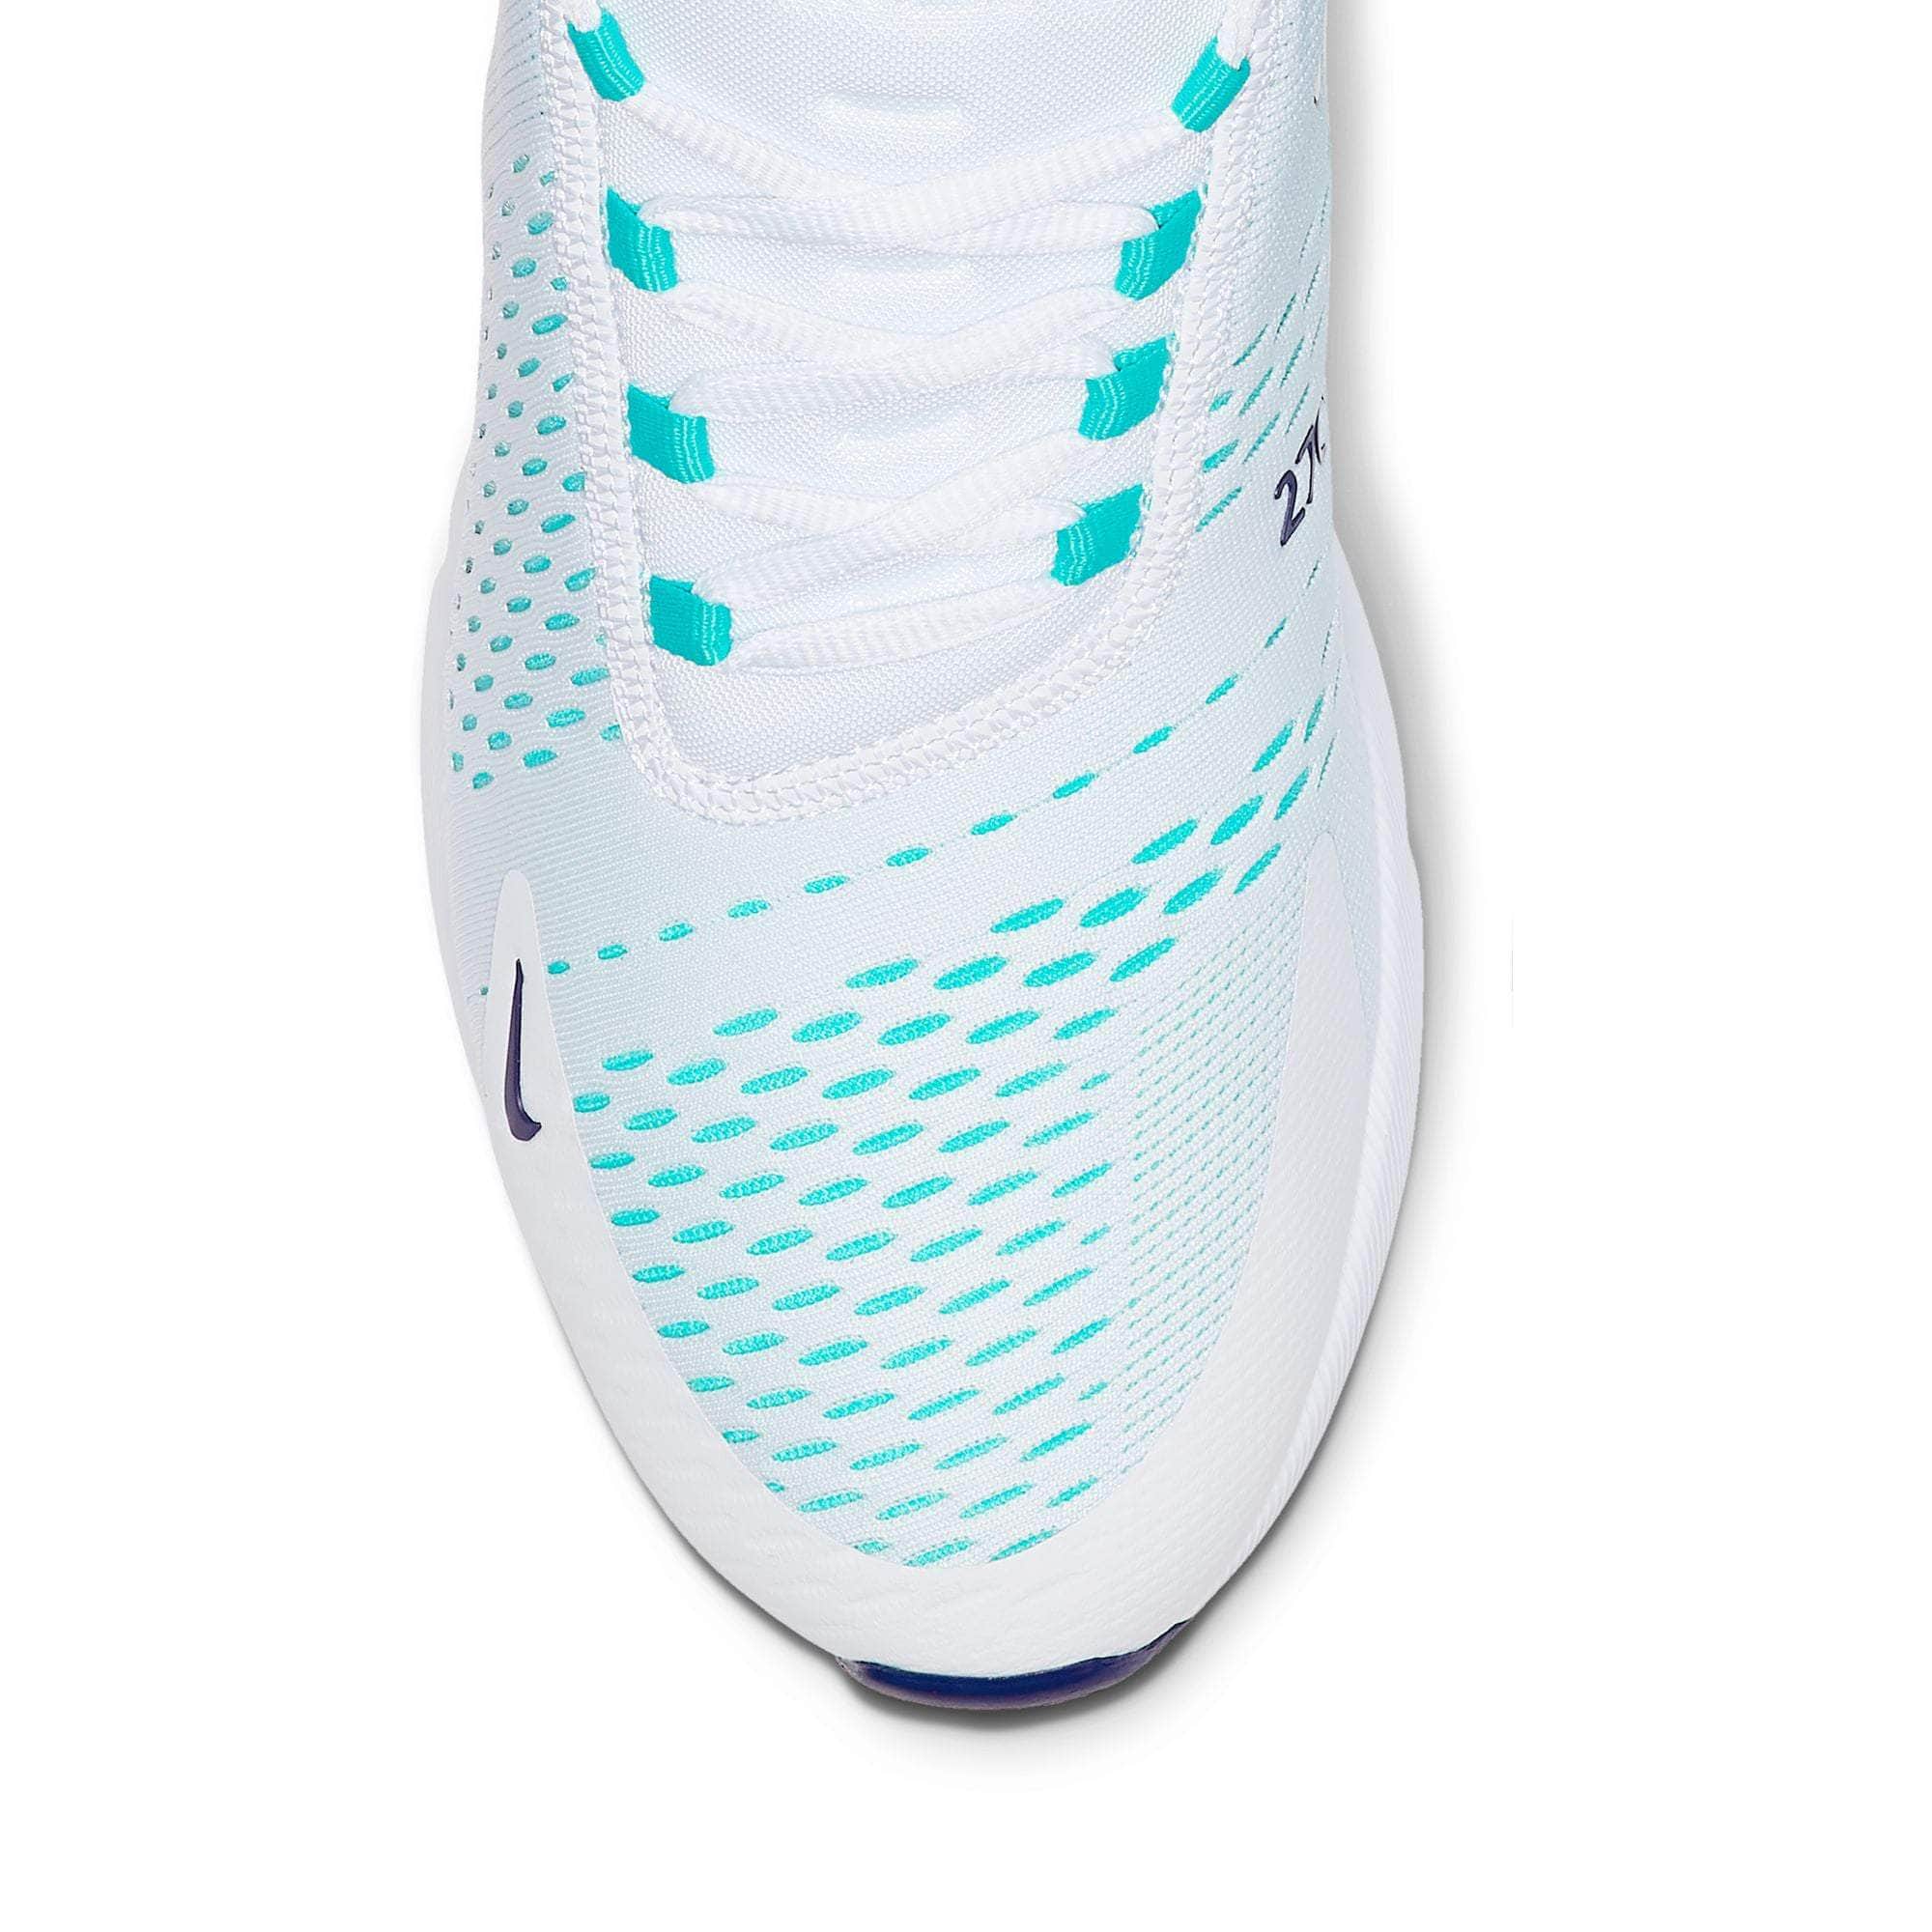 Nike Footwear Nike Air Max 270 "White Hyper Jade Deep Royal Blue" - Men's